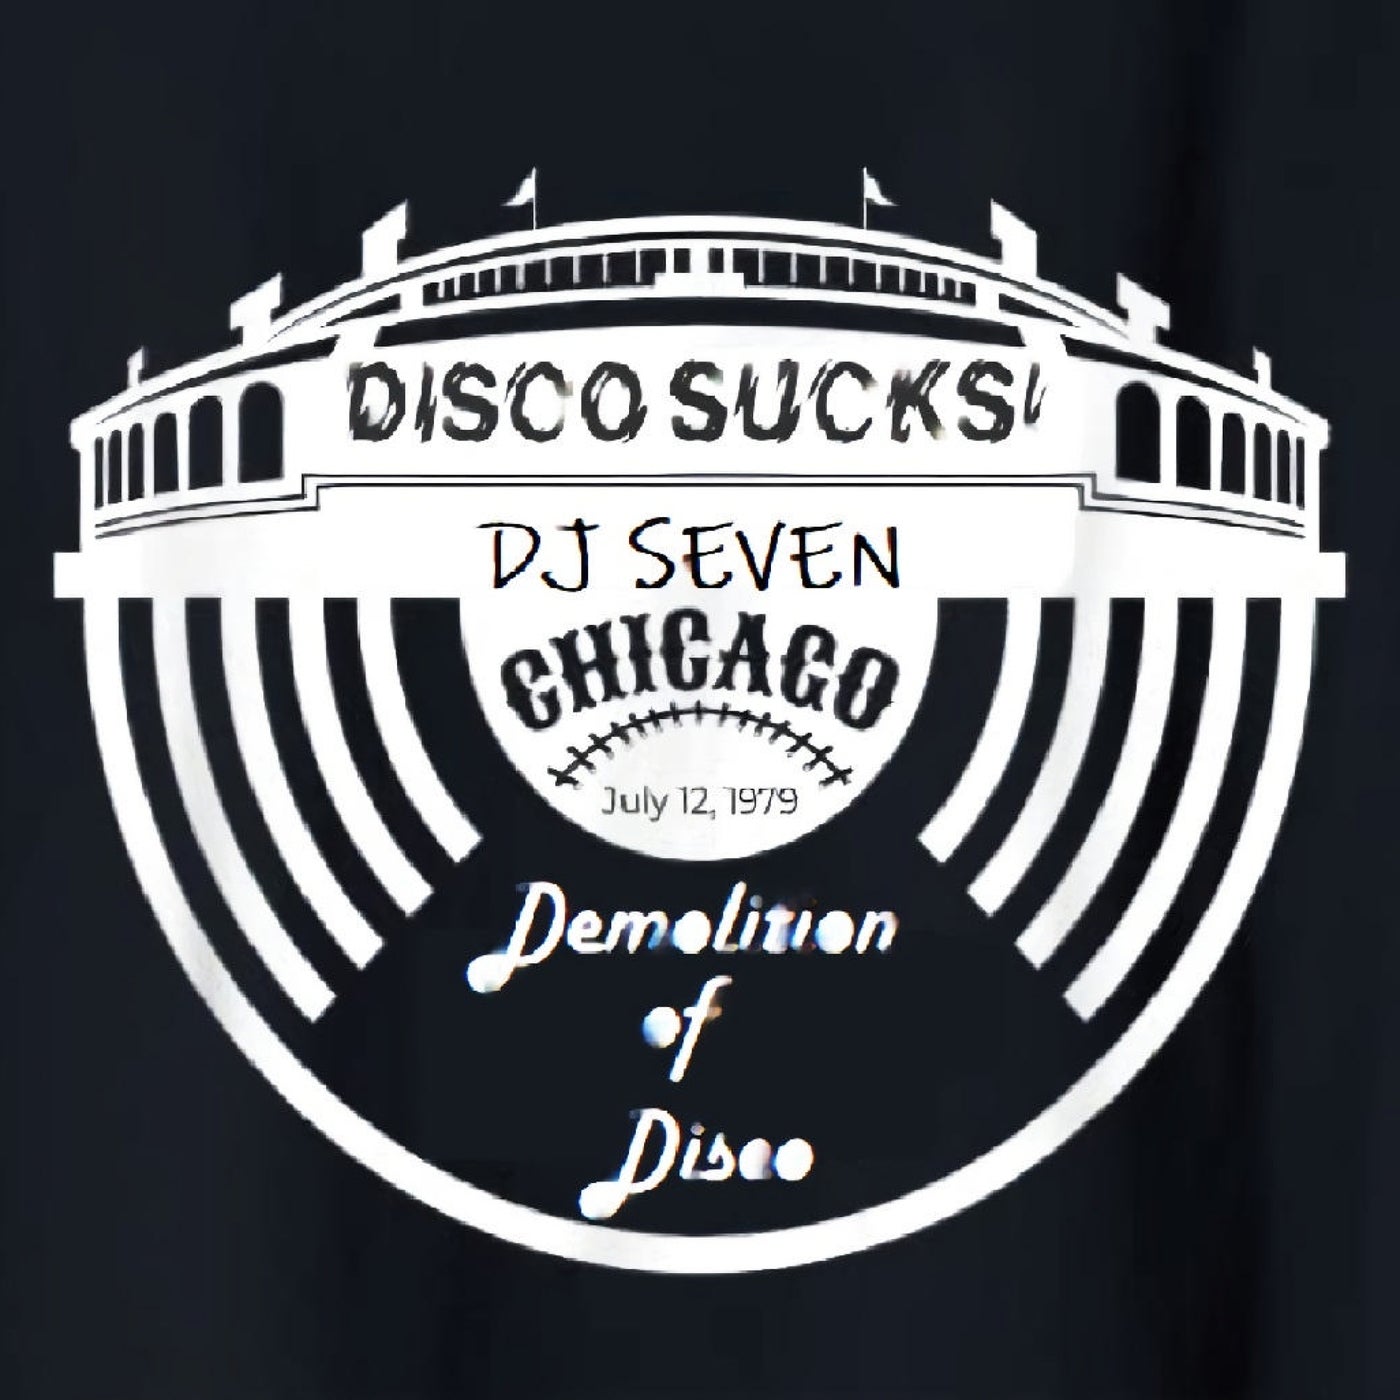 Demolition of Disco (Remastered)